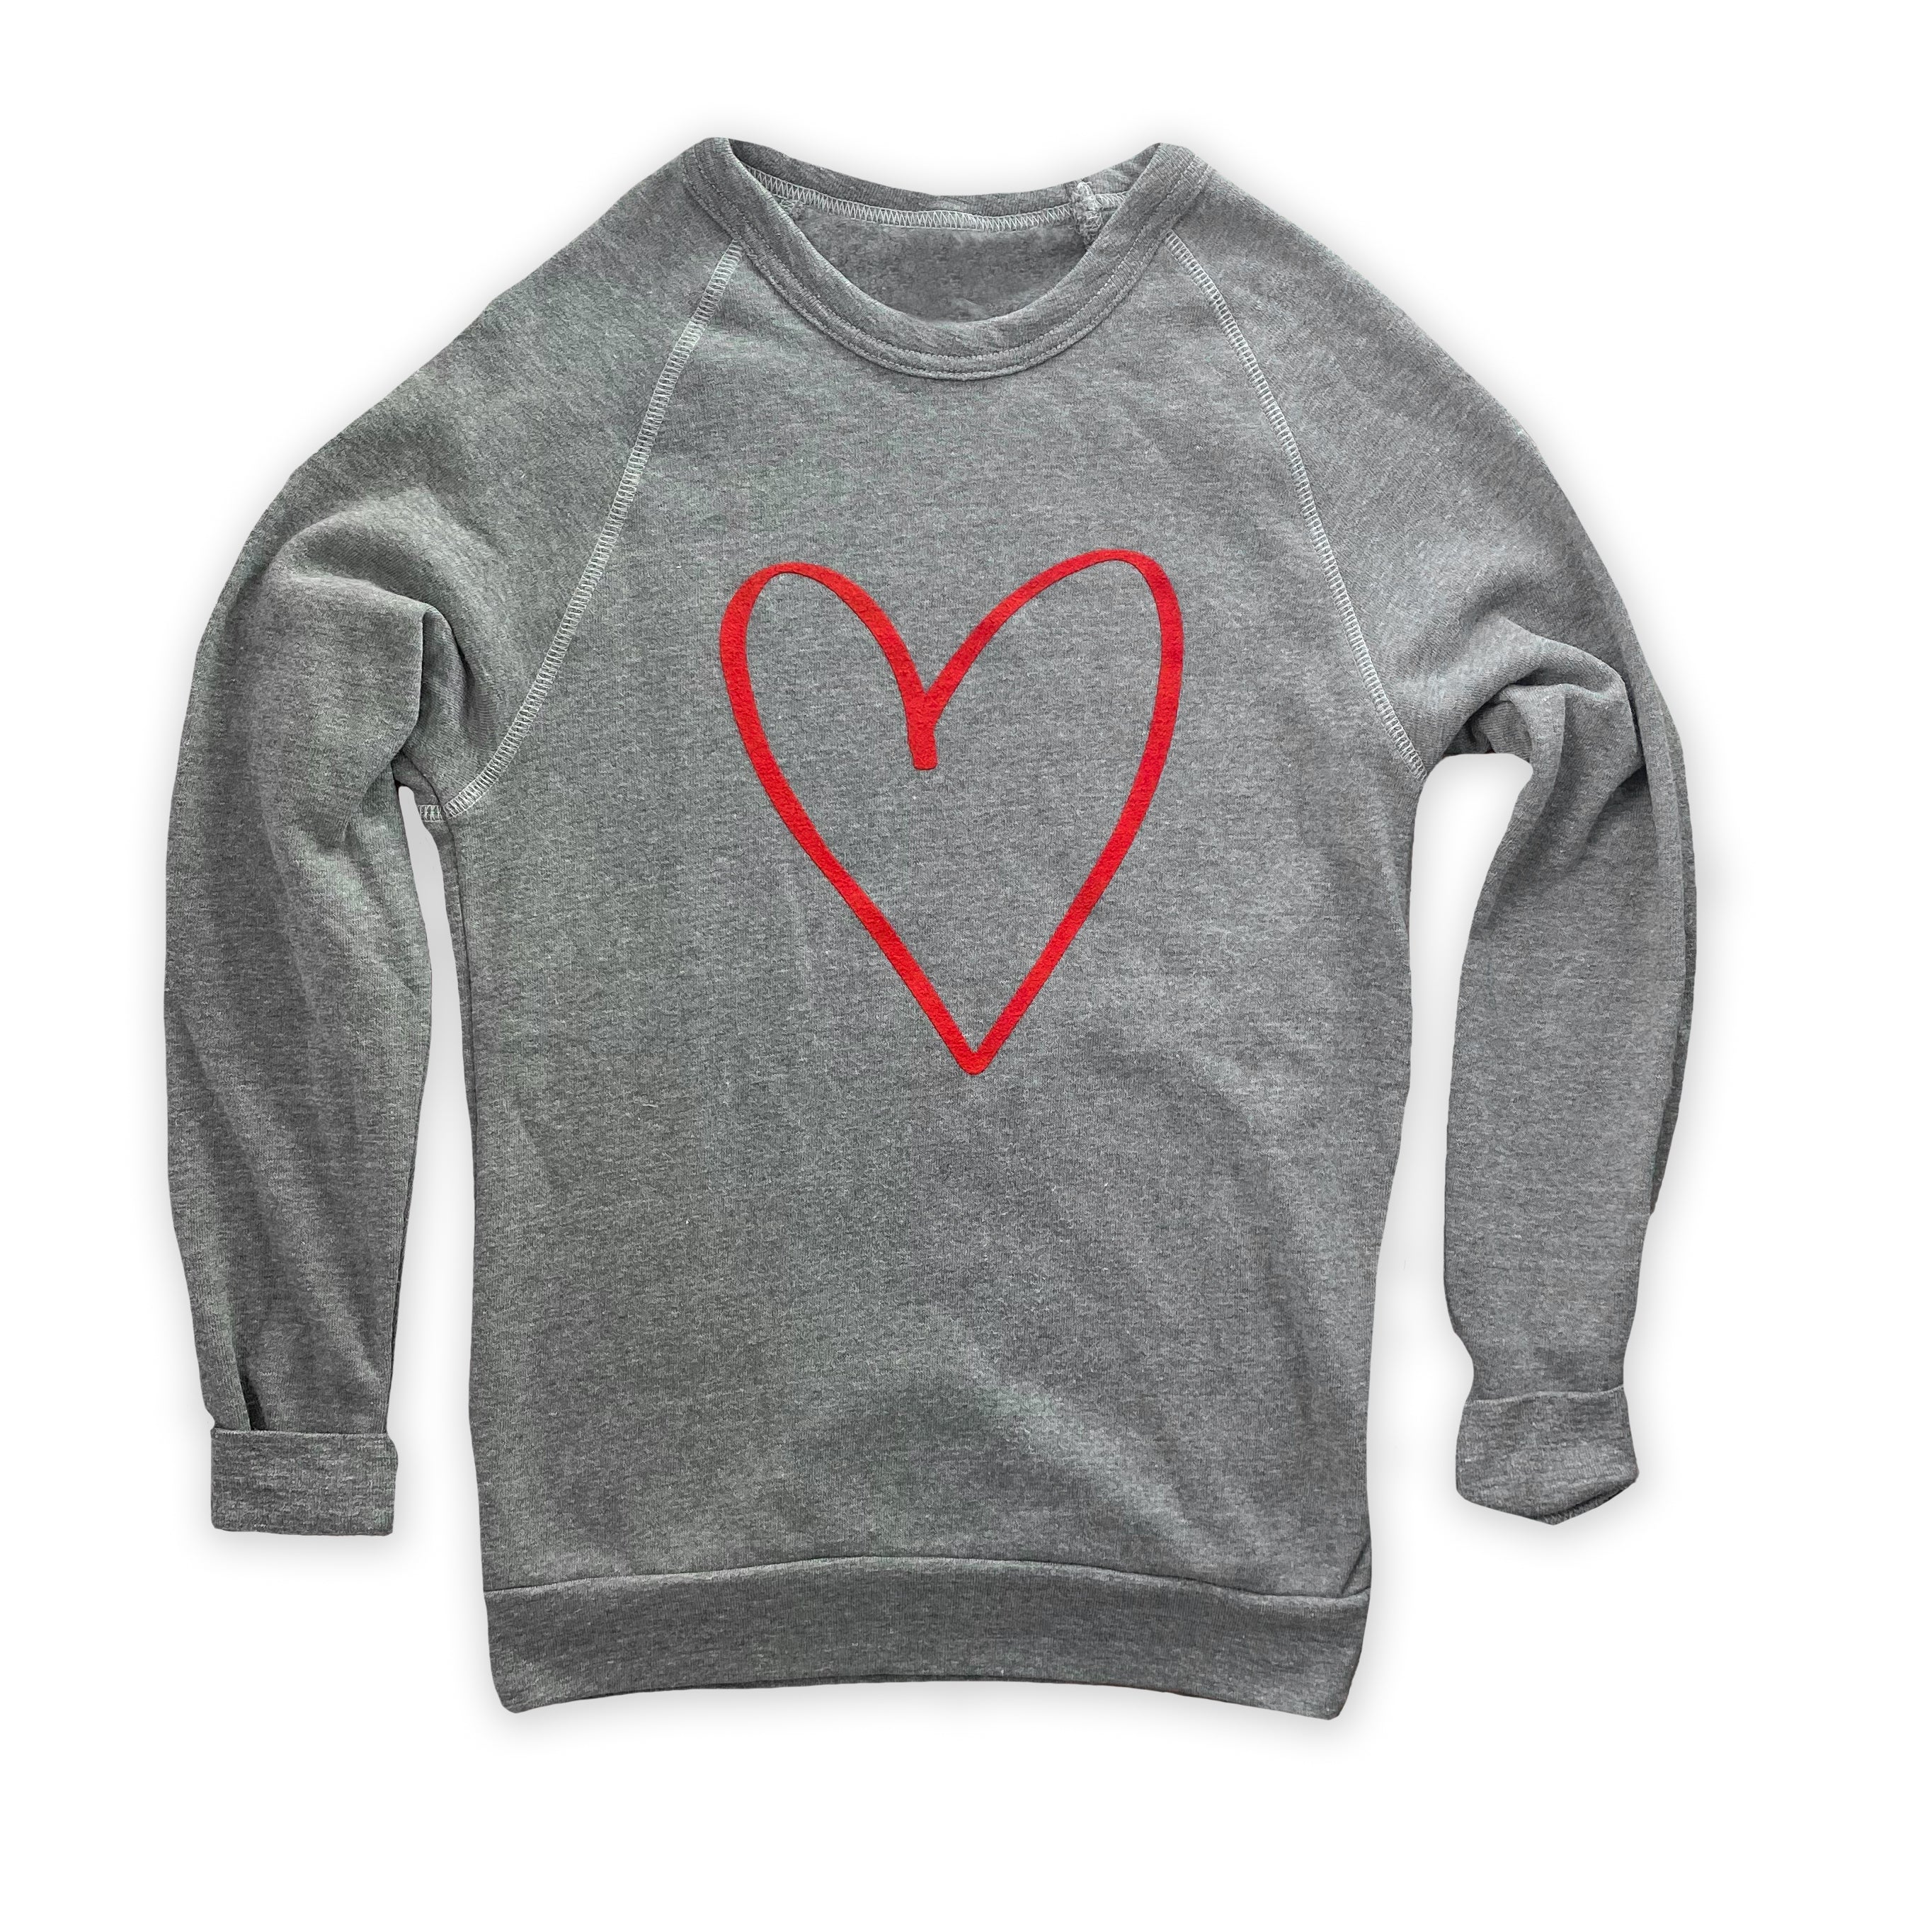 Show Some Love Heart sweatshirt